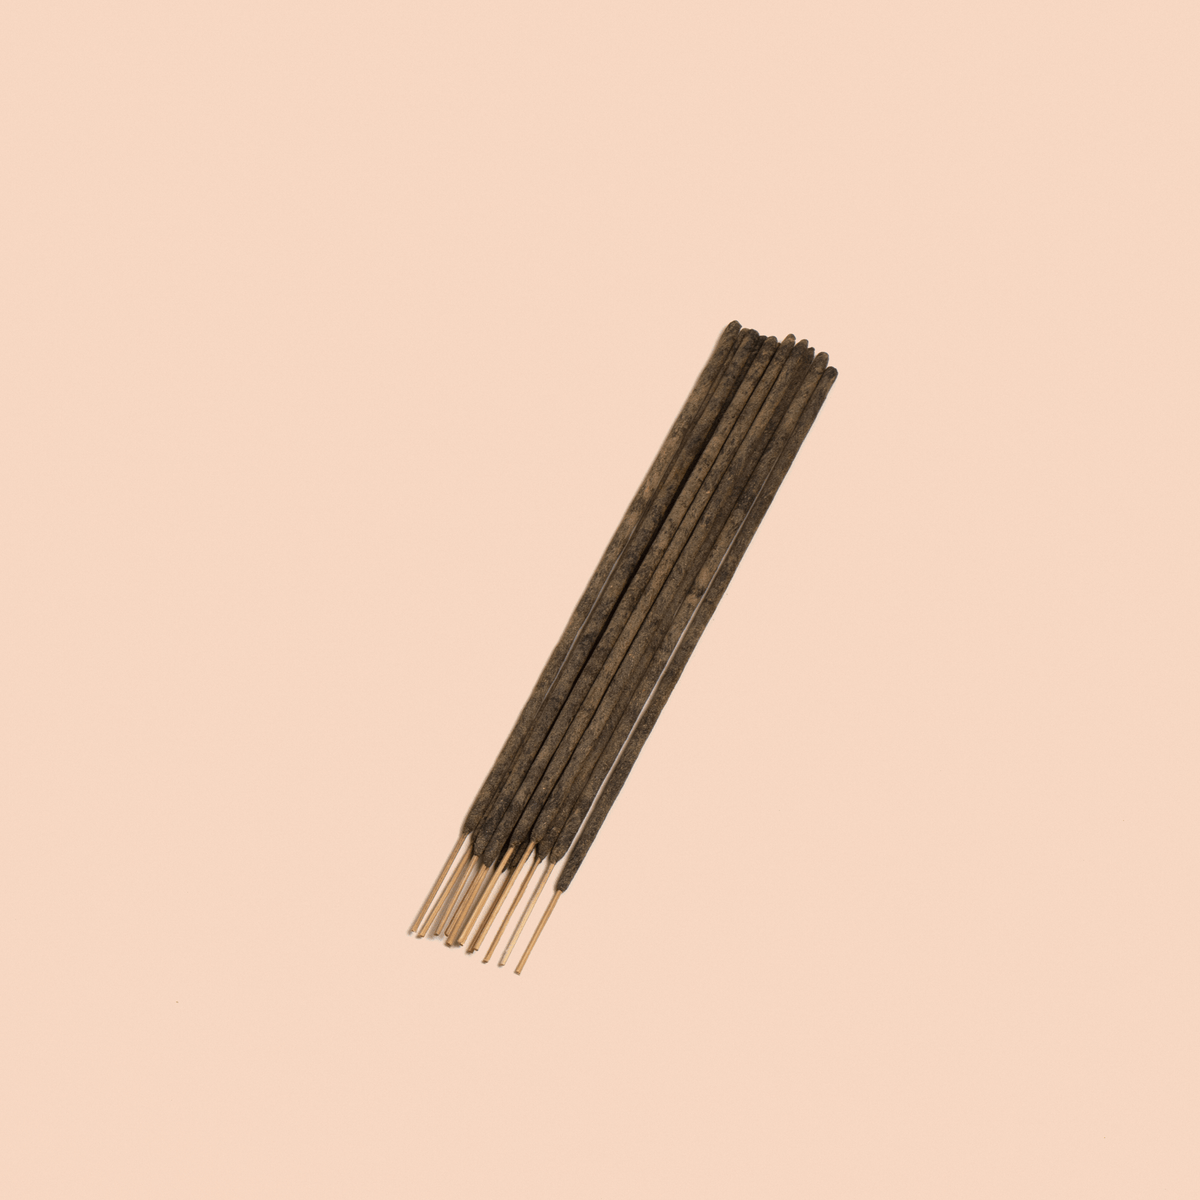 Tattva Natural Incense Sticks